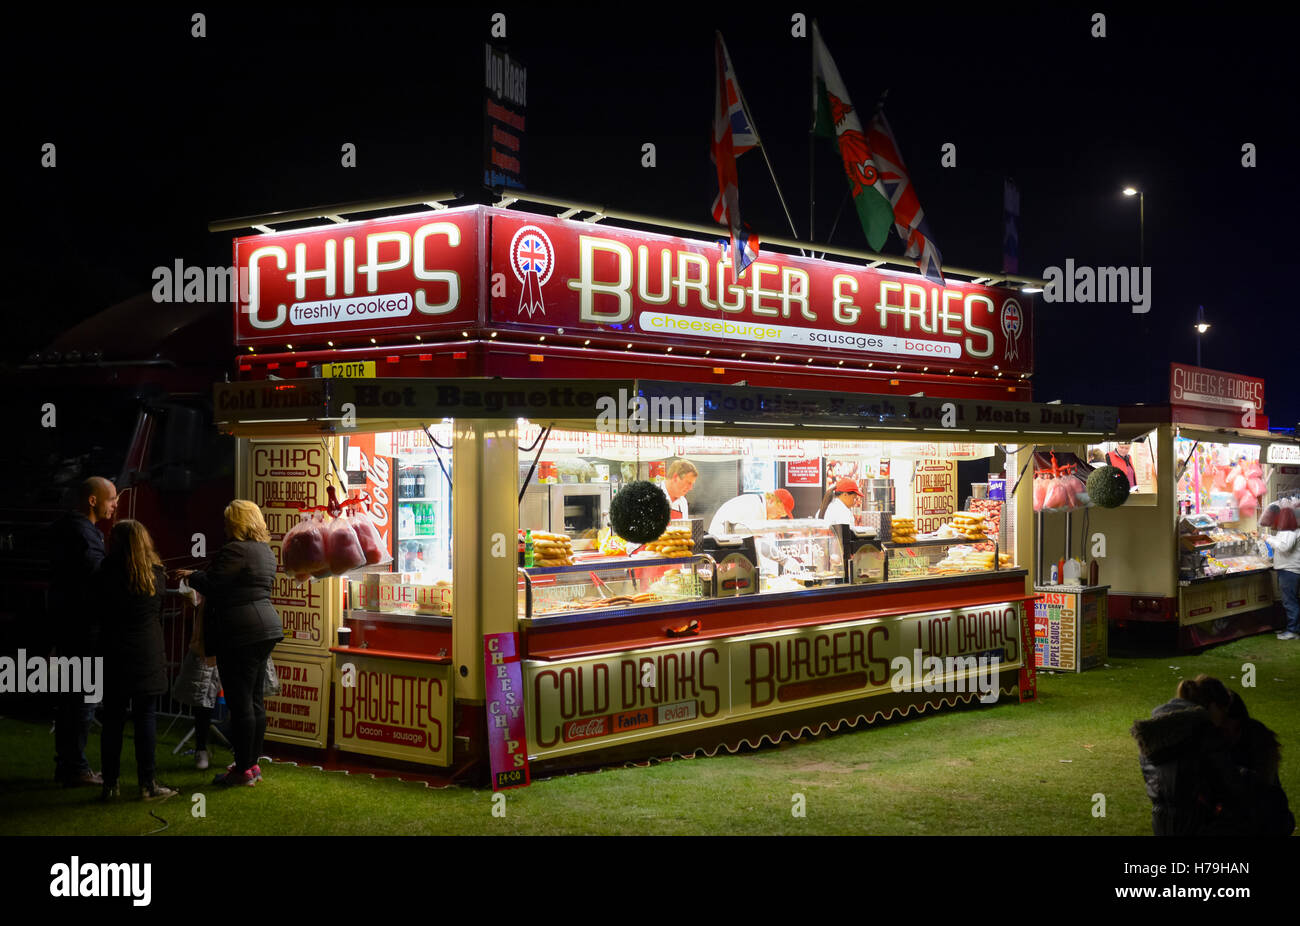 Burger van hi-res stock photography and images - Alamy